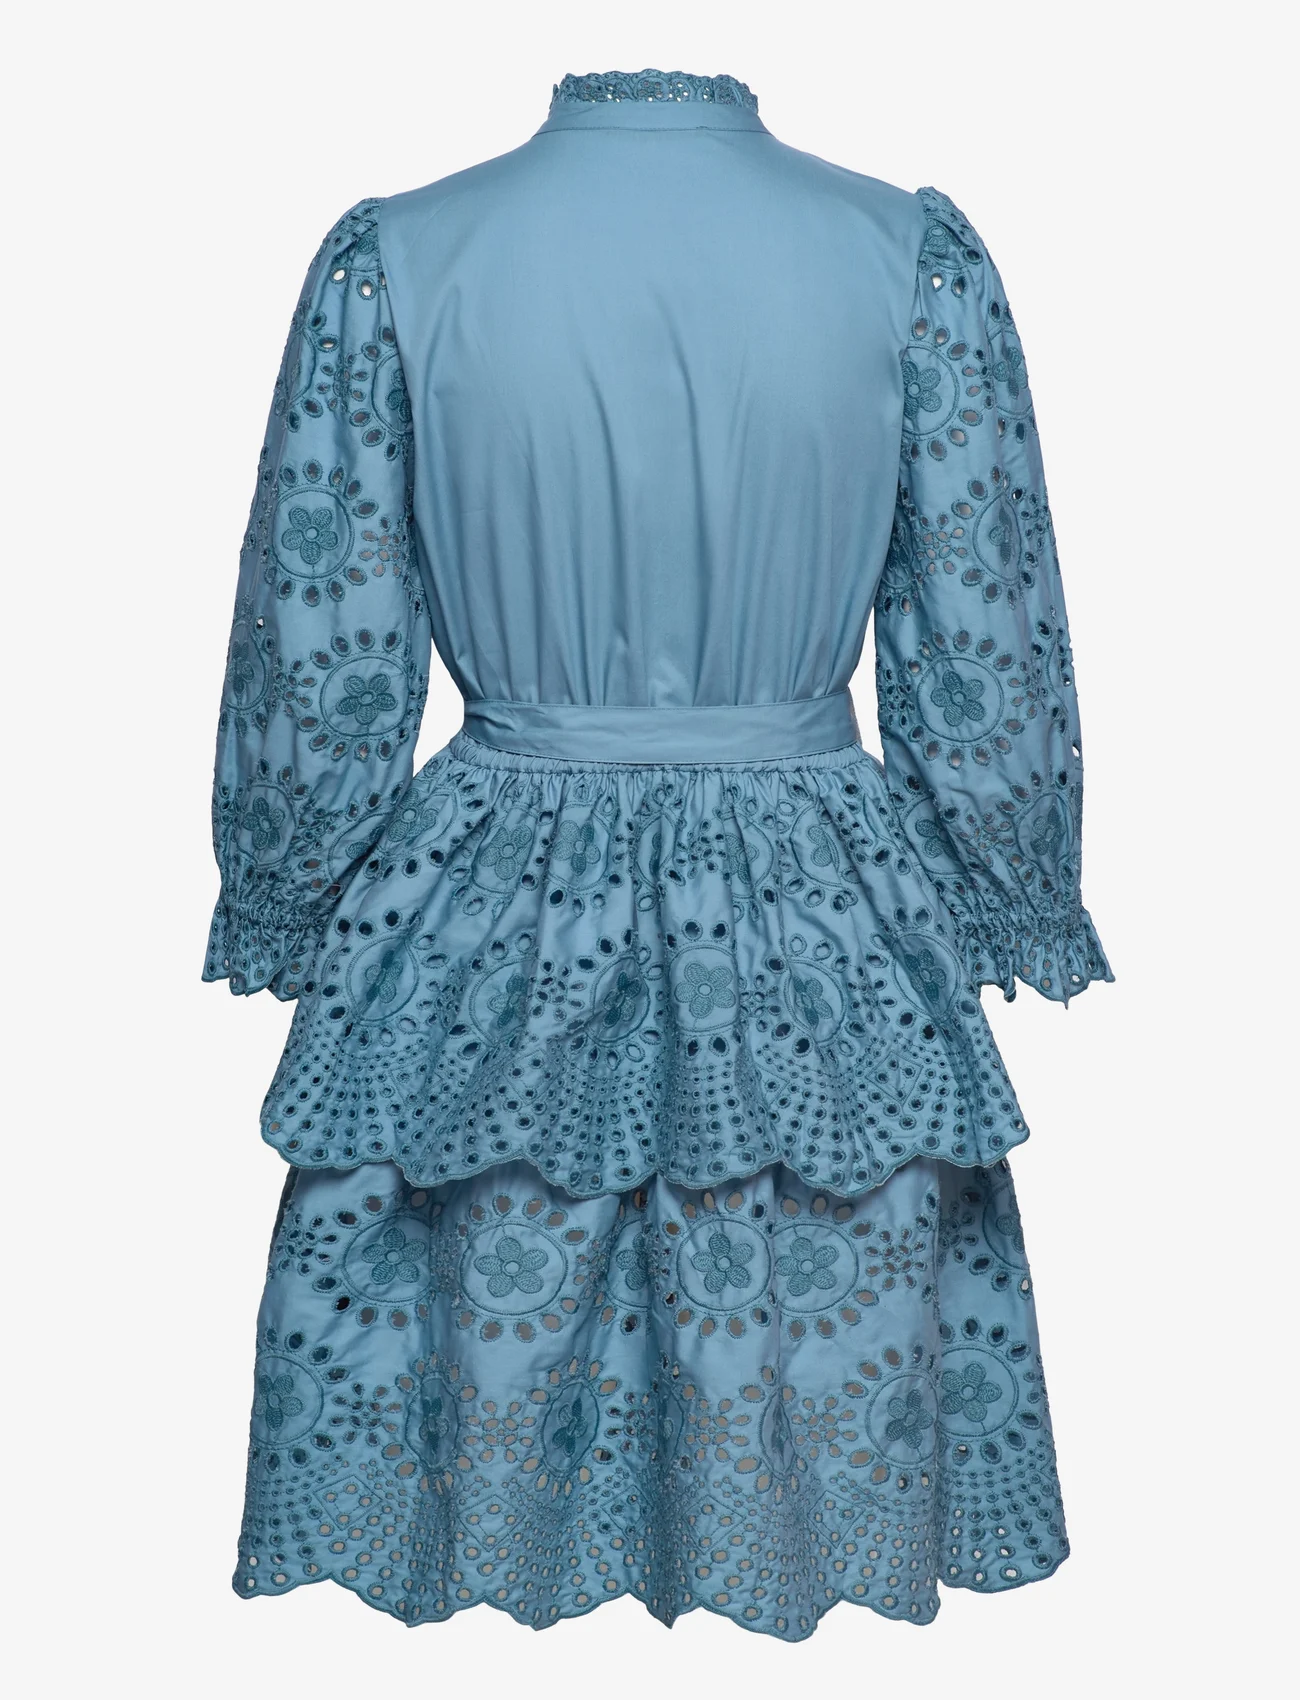 Bruuns Bazaar - Rosie Emlin dress - marškinių tipo suknelės - blue heaven - 1